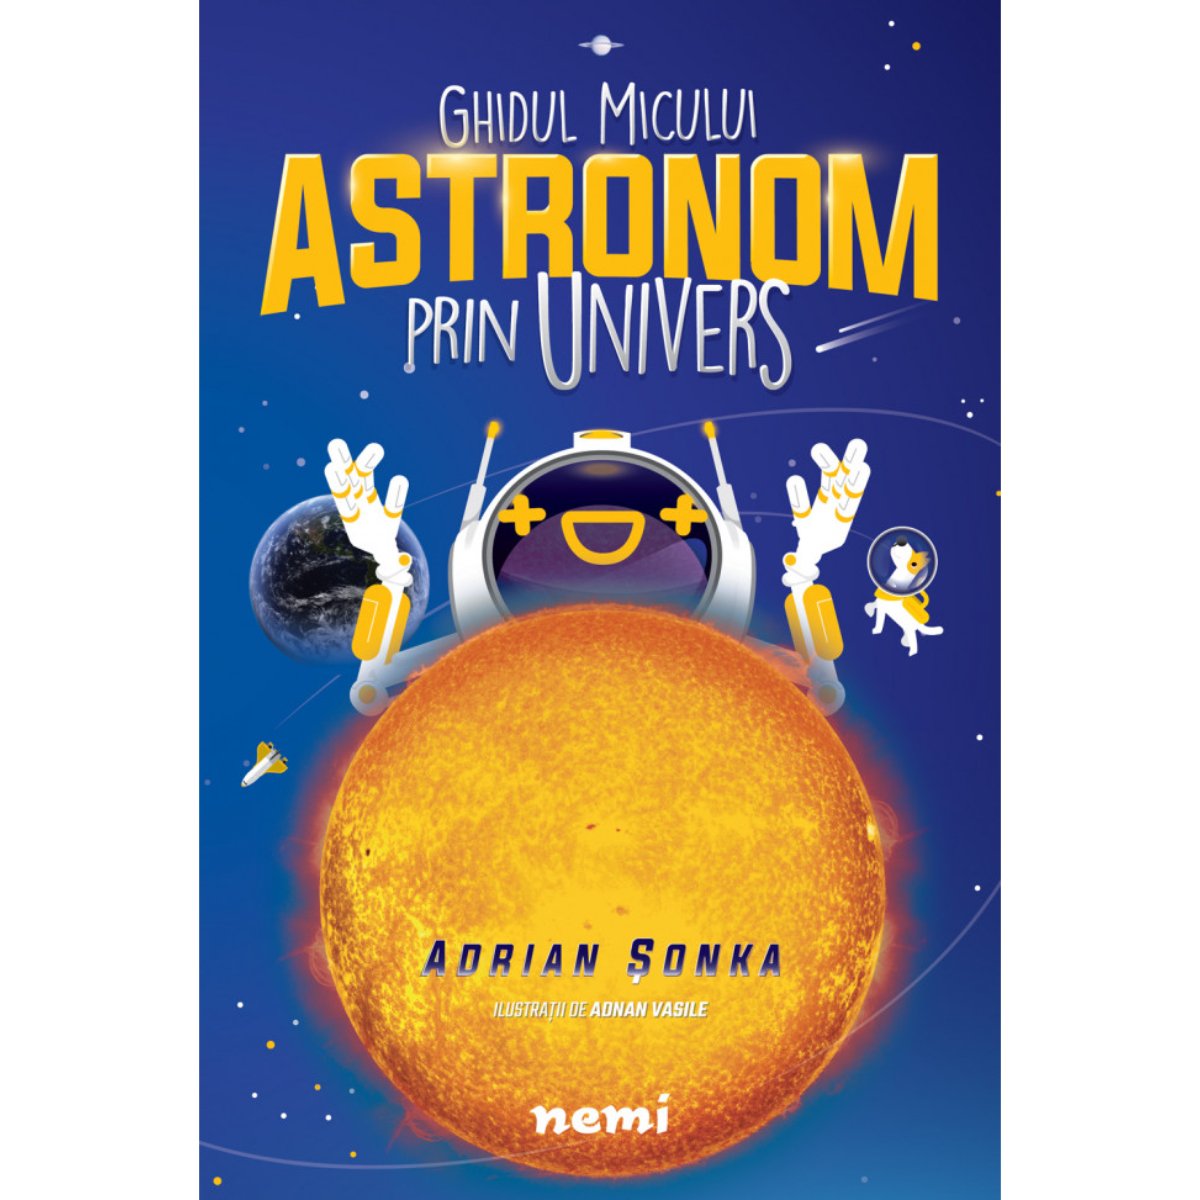 Ghidul micului astronom prin univers, Adnan Vasile, Adrian Sonka